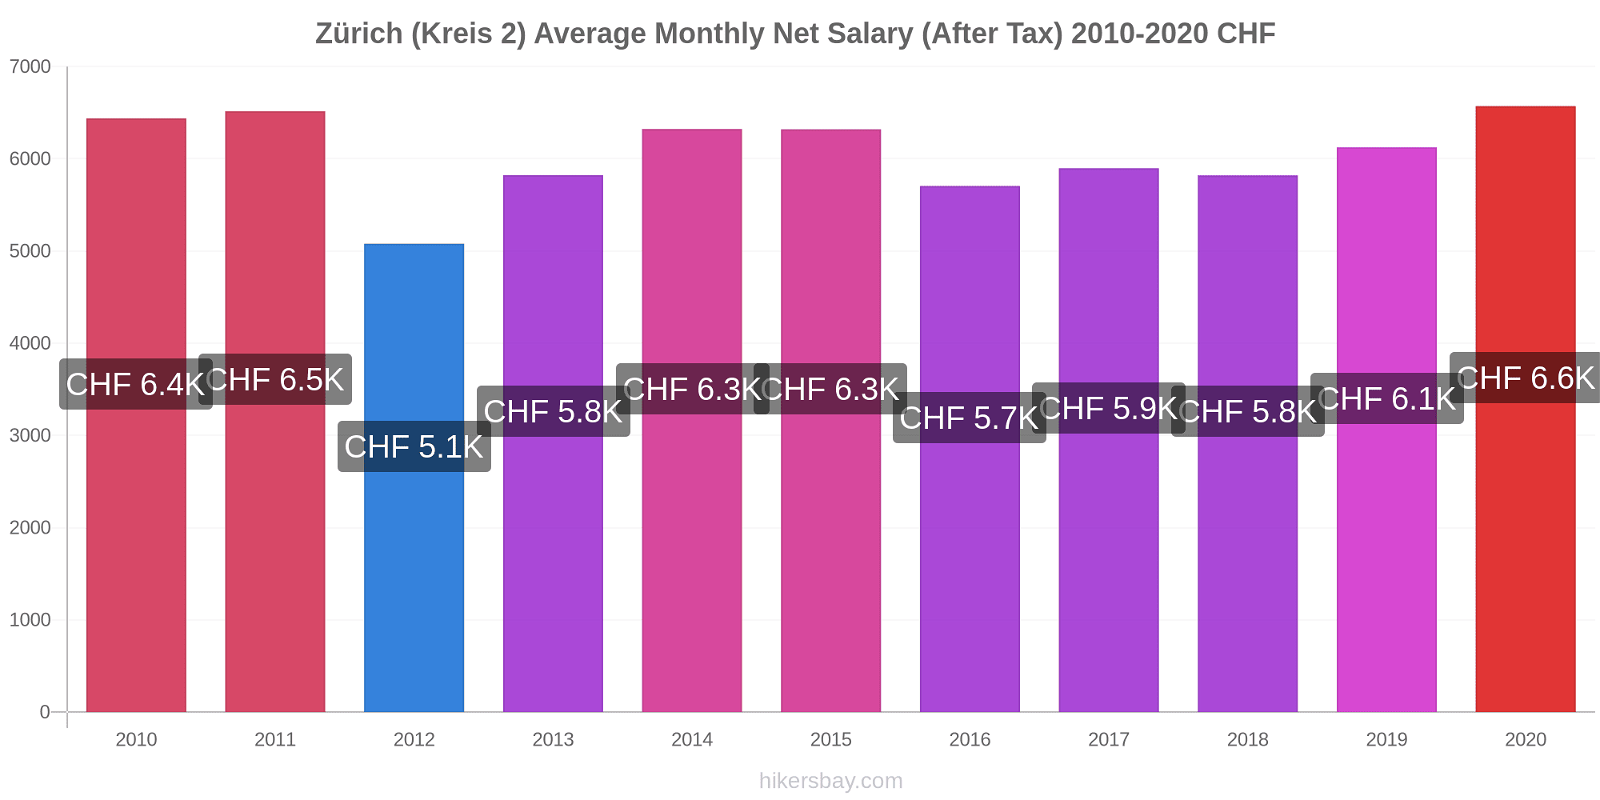 Zürich (Kreis 2) price changes Average Monthly Net Salary (After Tax) hikersbay.com